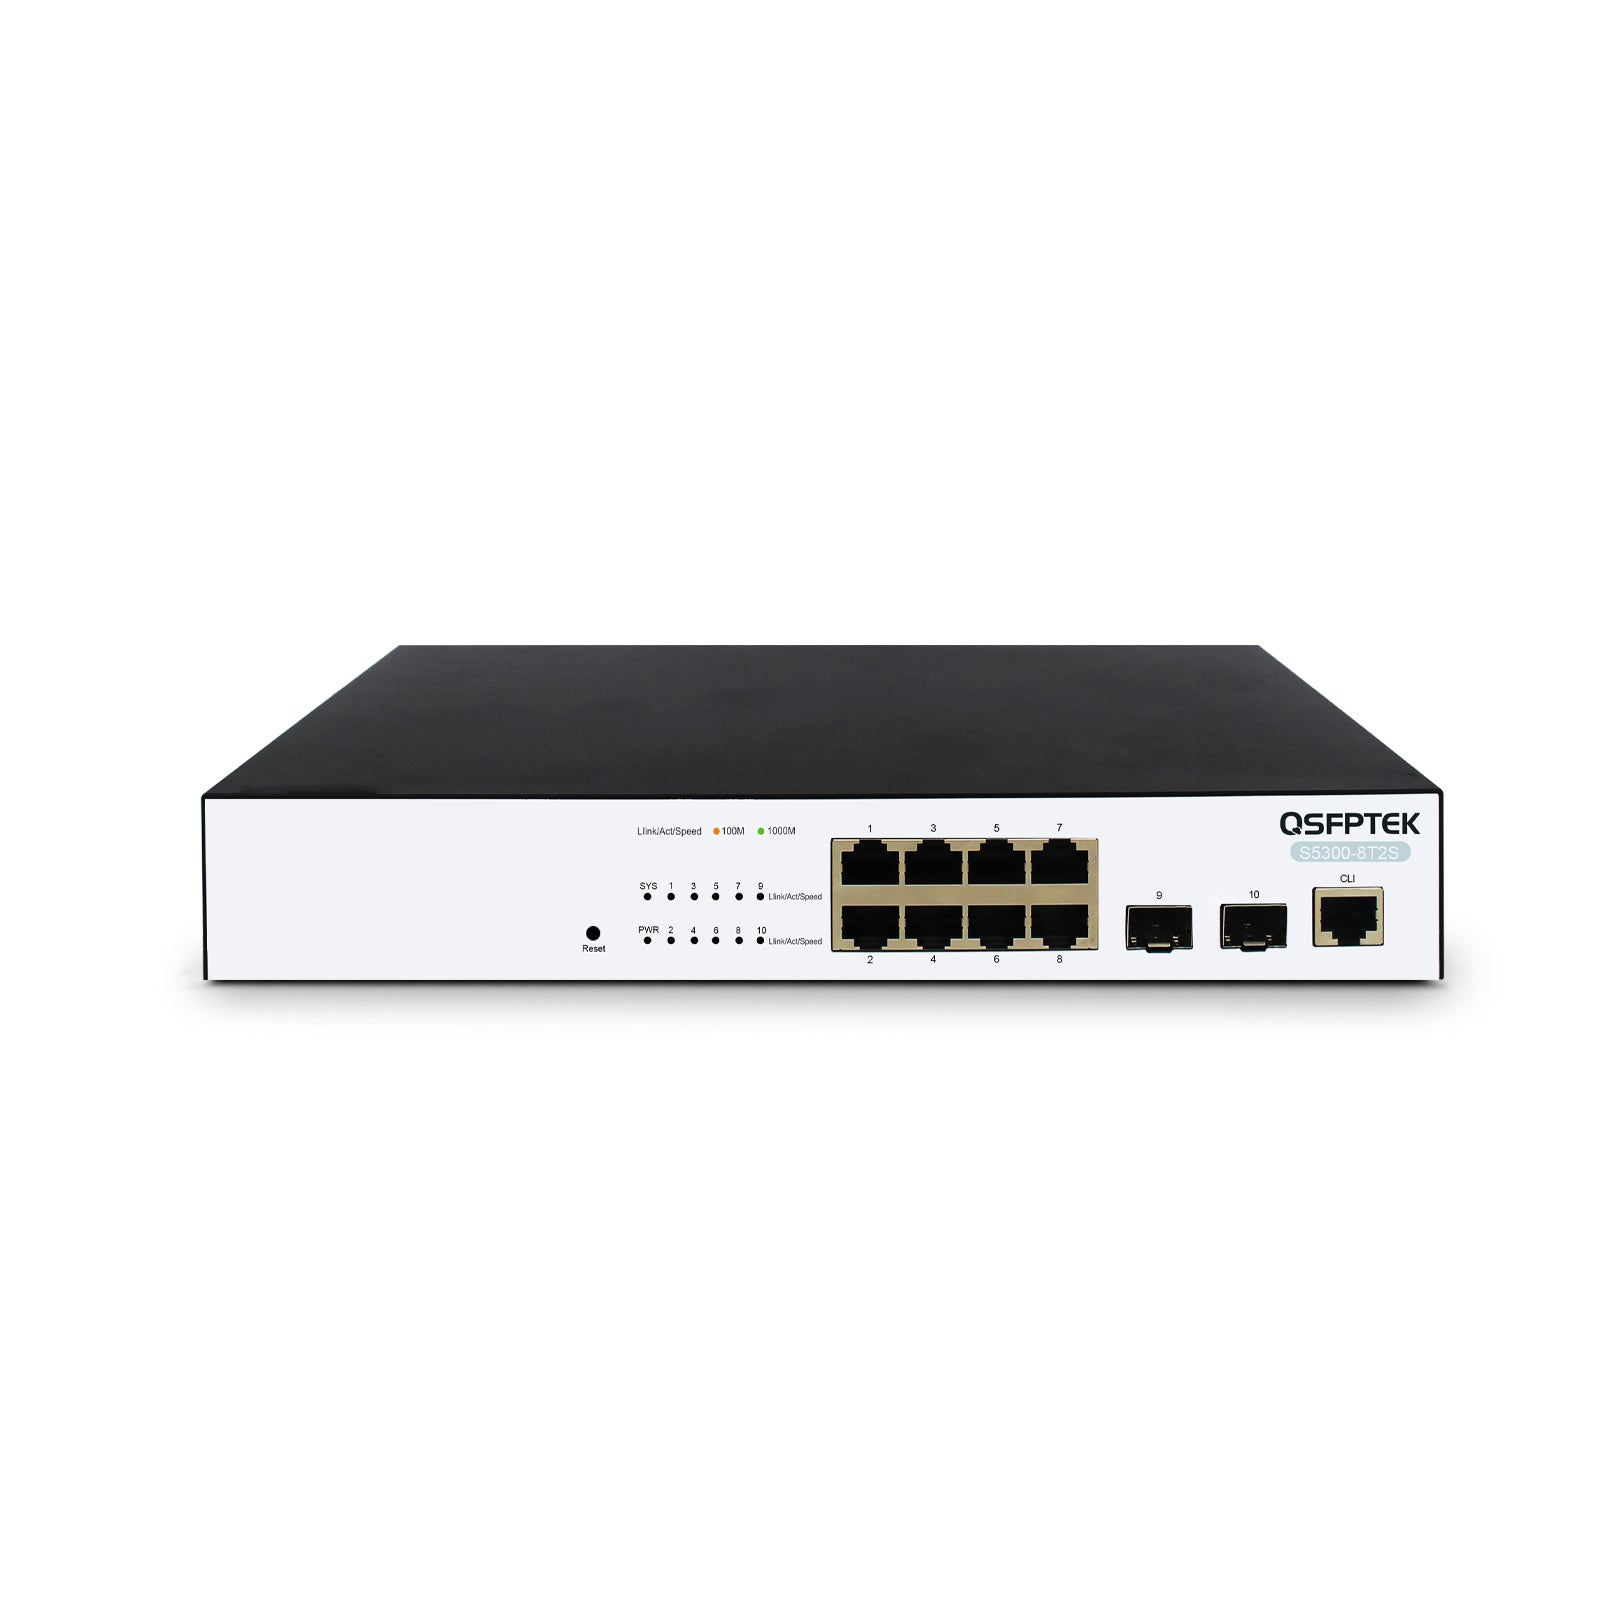 S5300-8T2S, 8-Port Ethernet L2+ Access Switch, 8x 10/100/1000BASE-T RJ45 Ports with 2x 100/1000M SFP Uplinks, Fanless